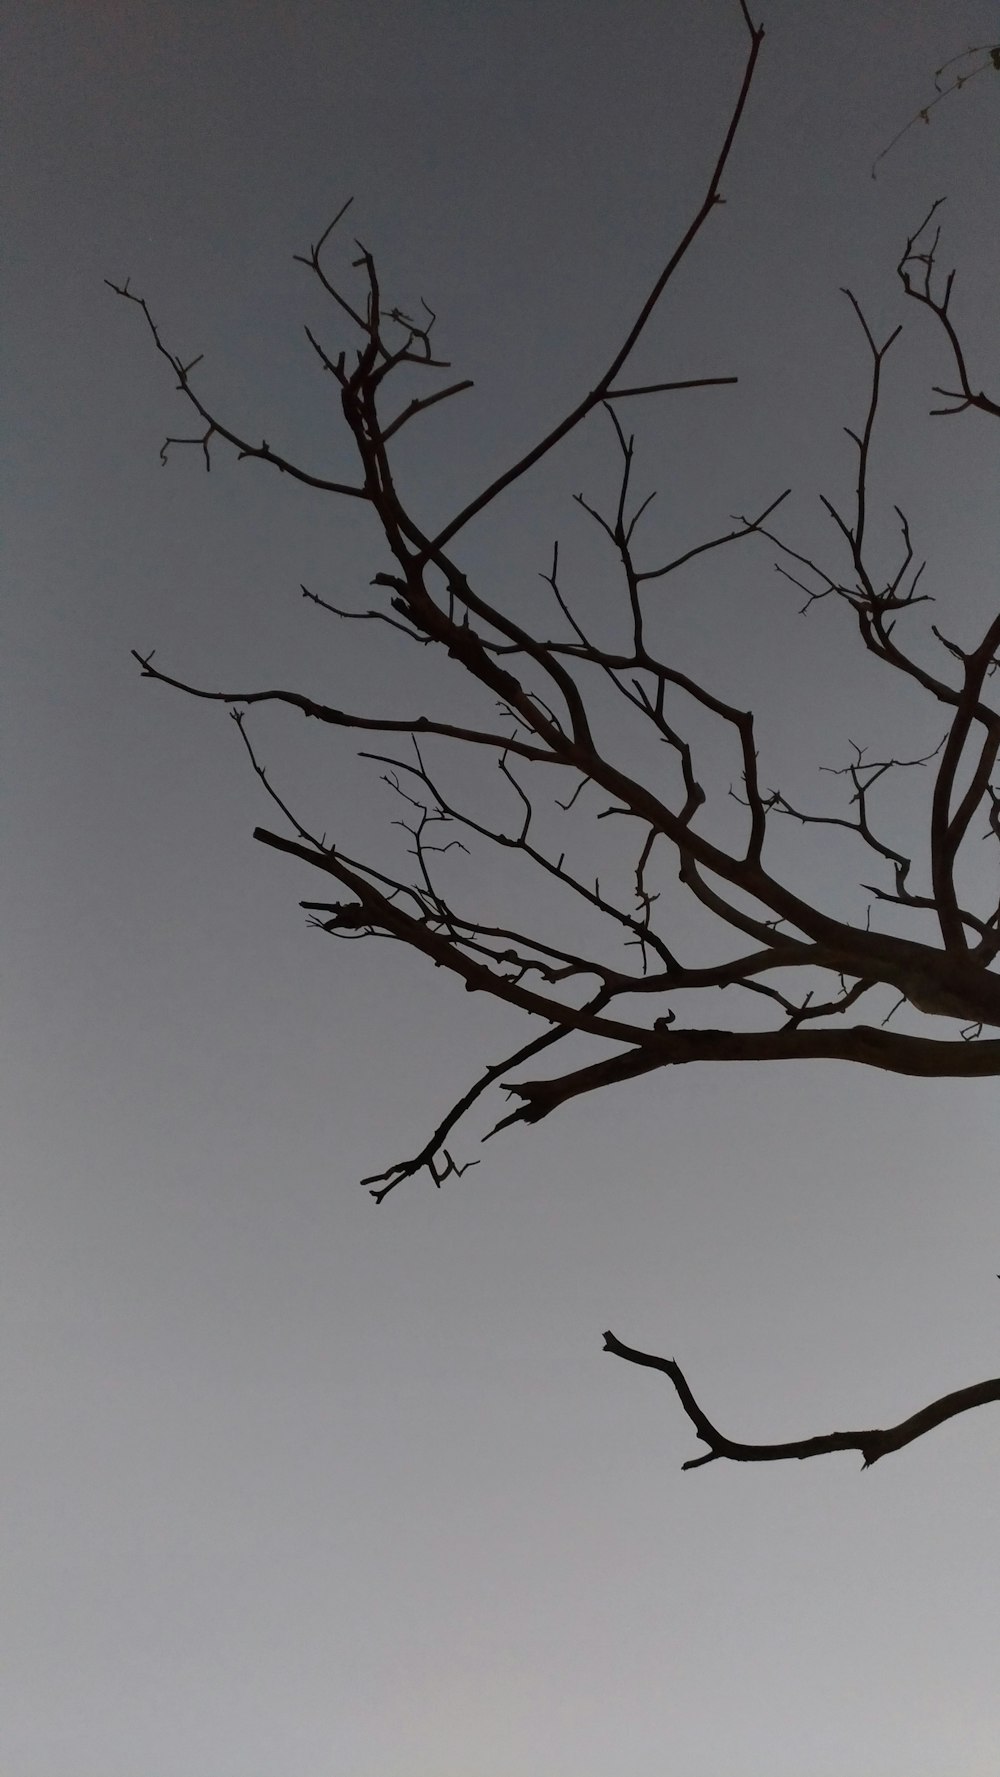 tree branch under gray sky